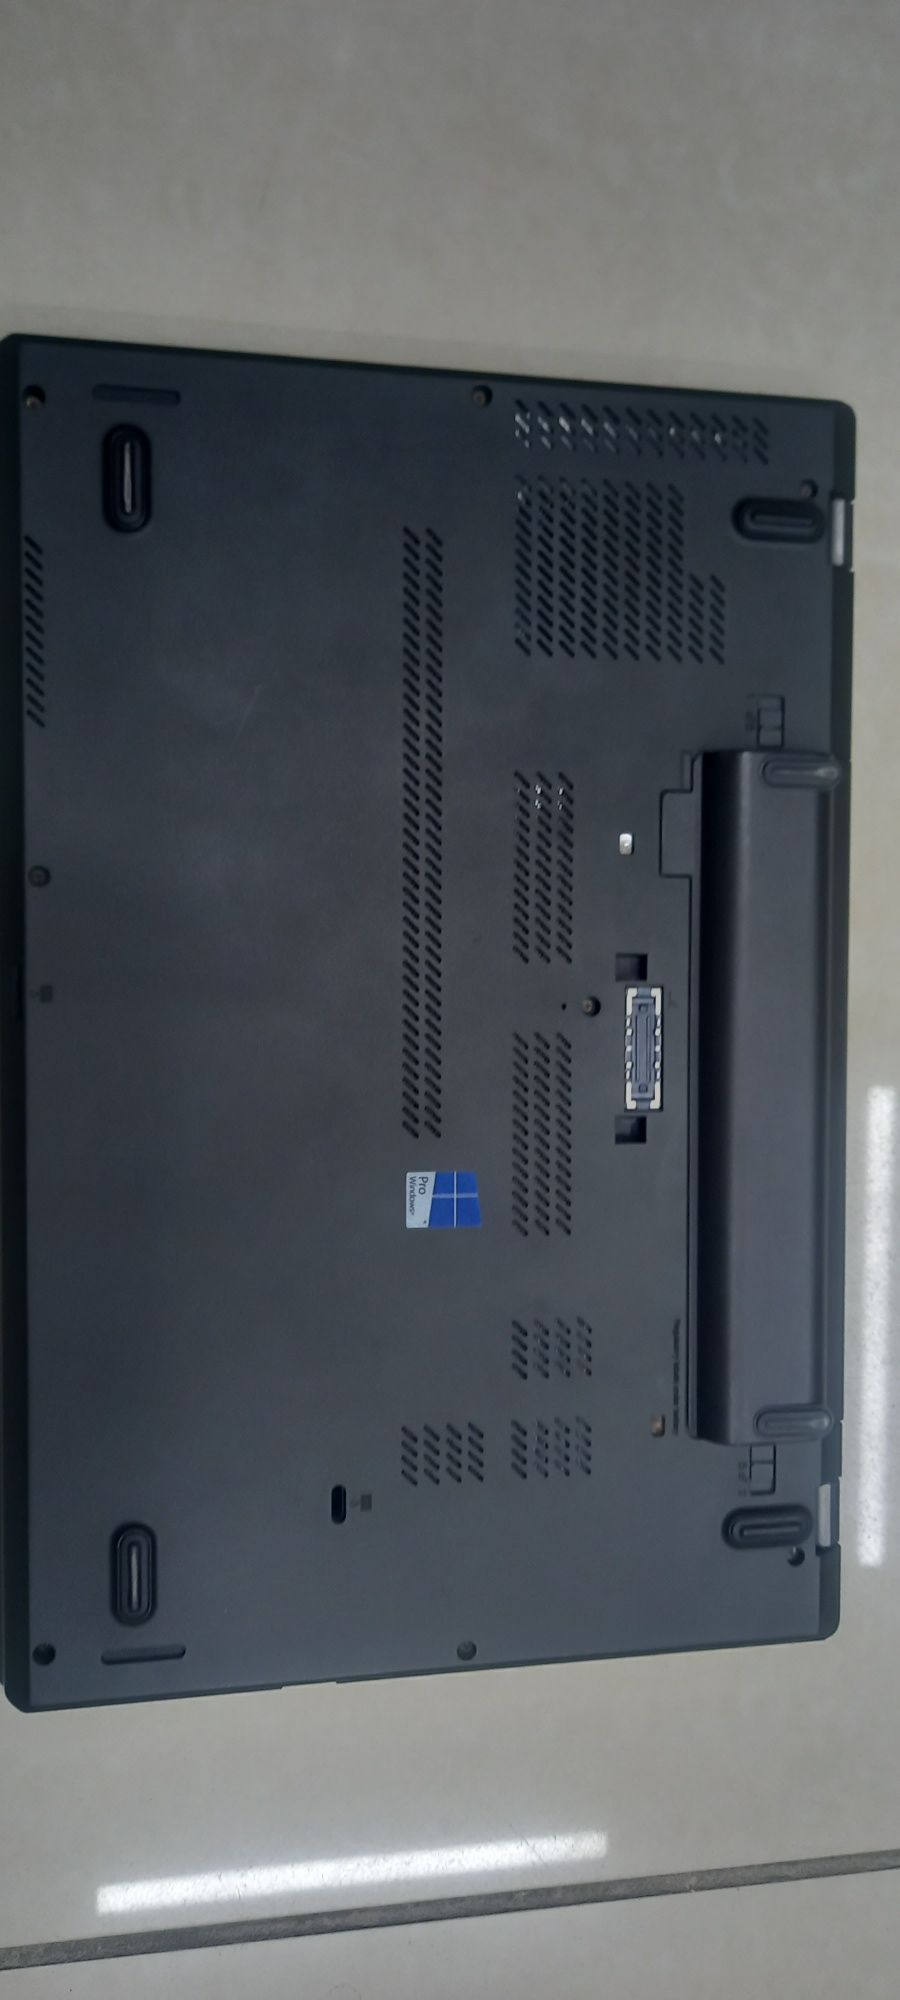 Ноутбук Lenovo ThinkPad P50s

DualCore Intel Core i7-6500U, 3100 MHz (